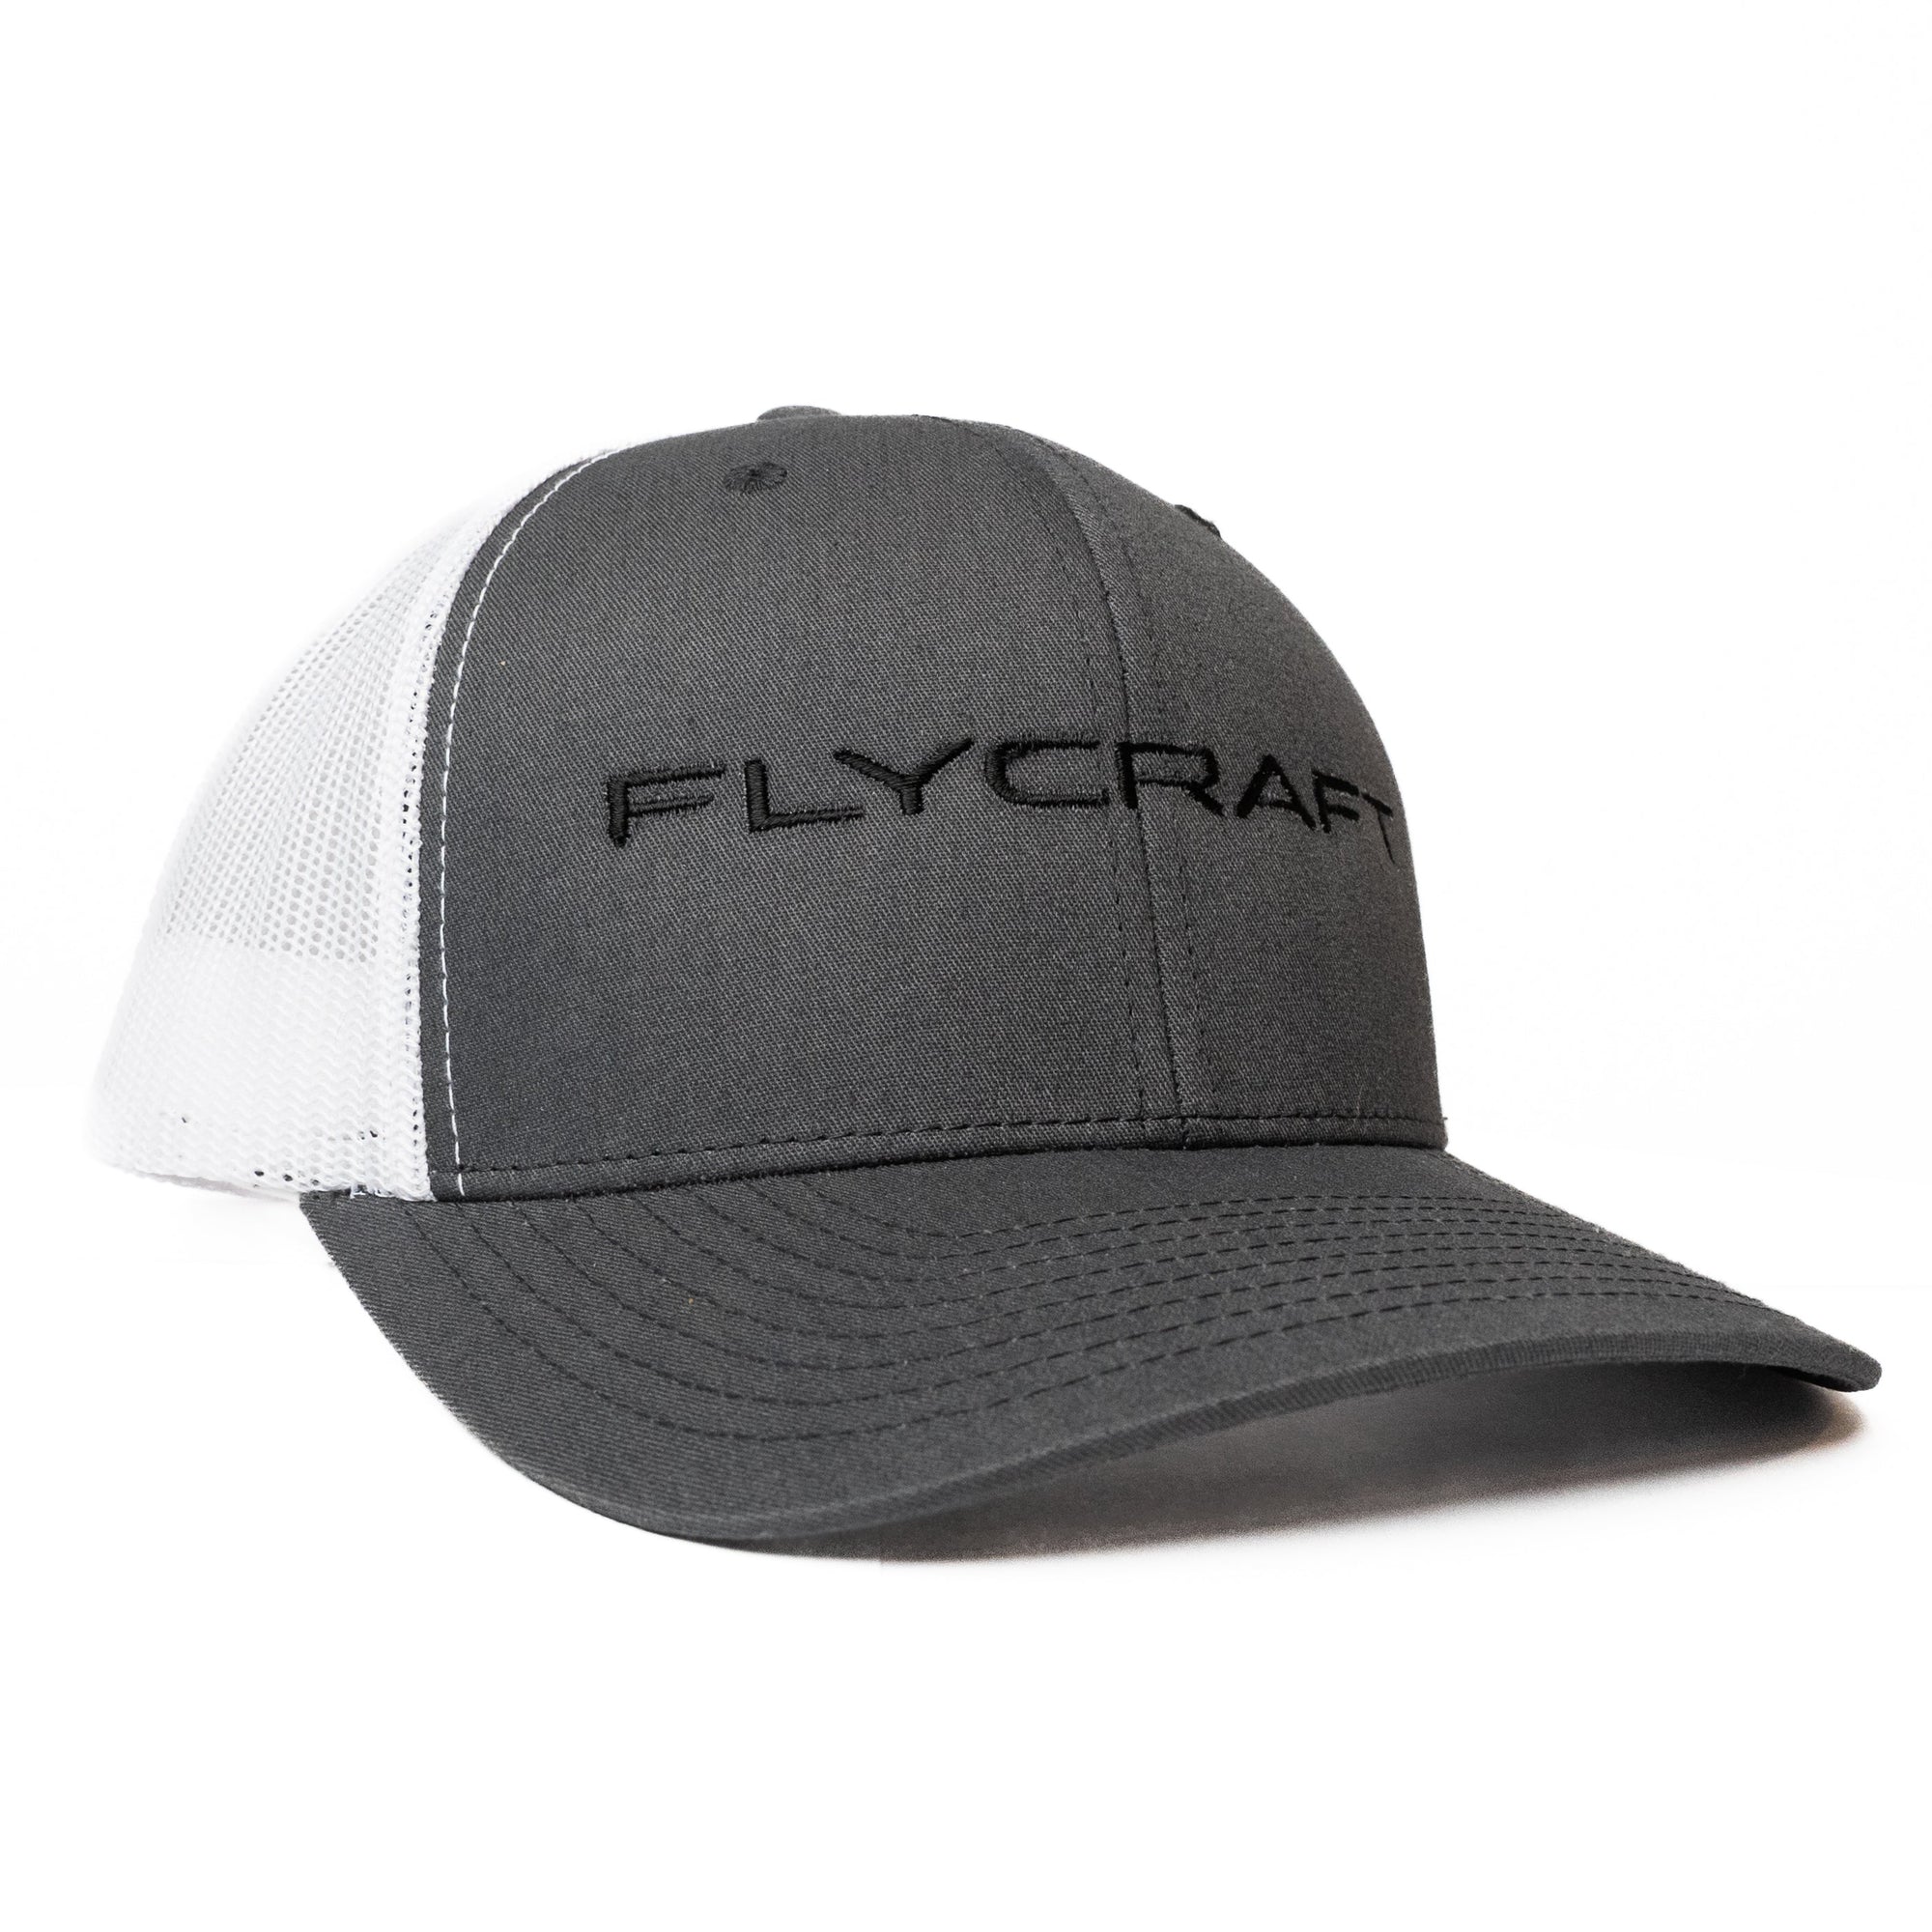 Flycraft Hat